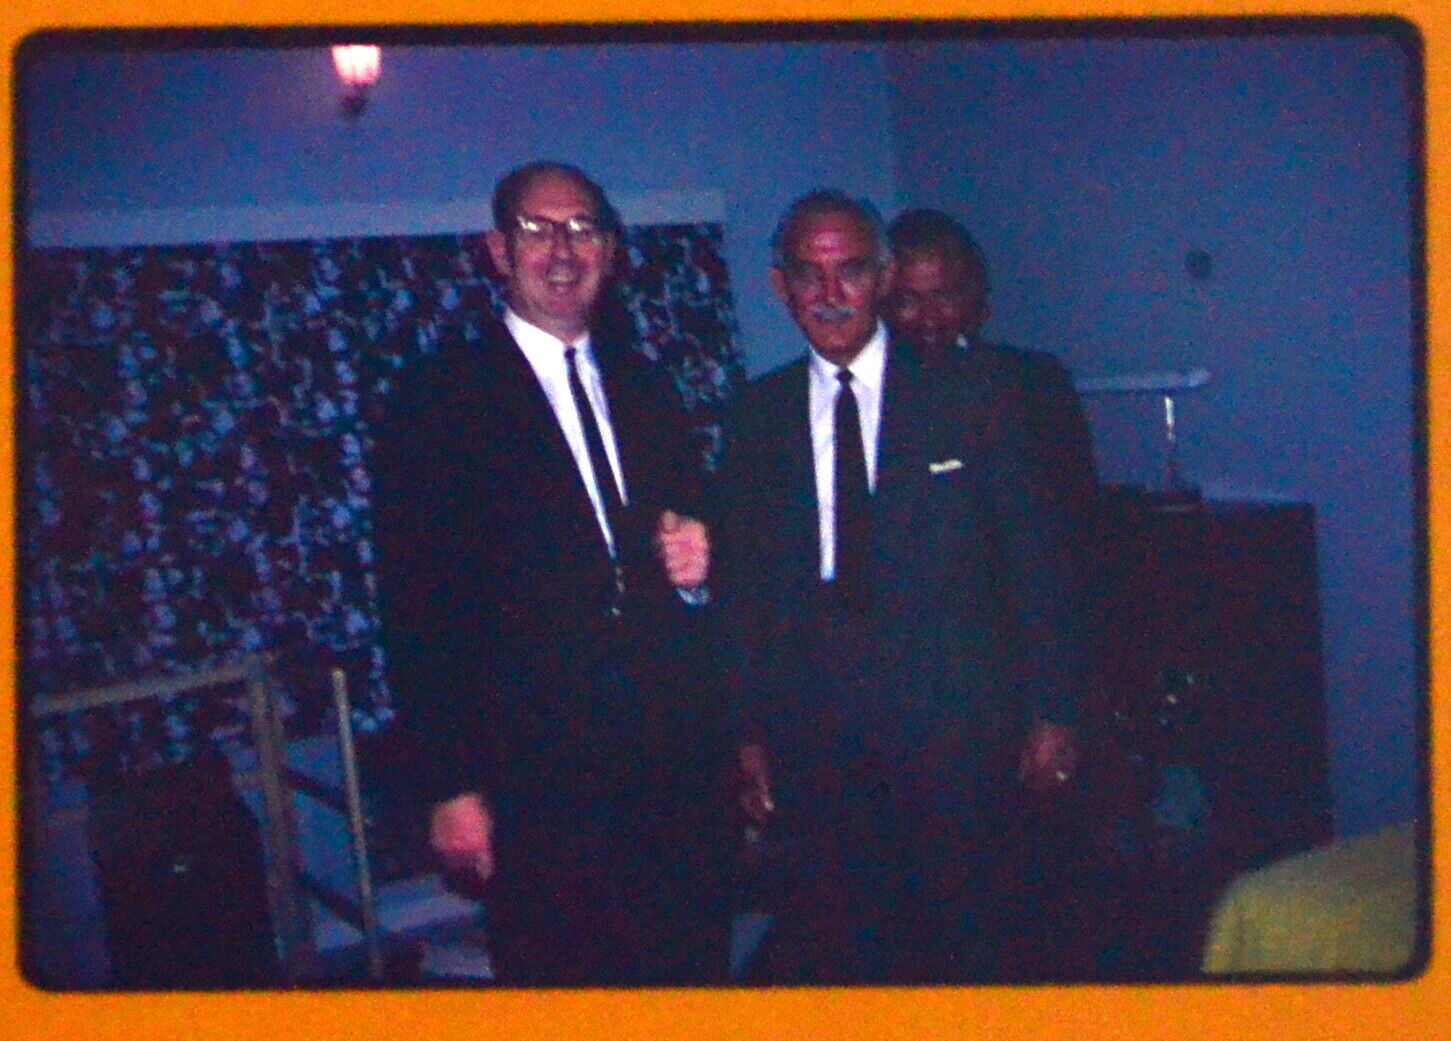 35mm Colour Slide 1968 Retro Color Transparency Handsome Men Wearing Suits